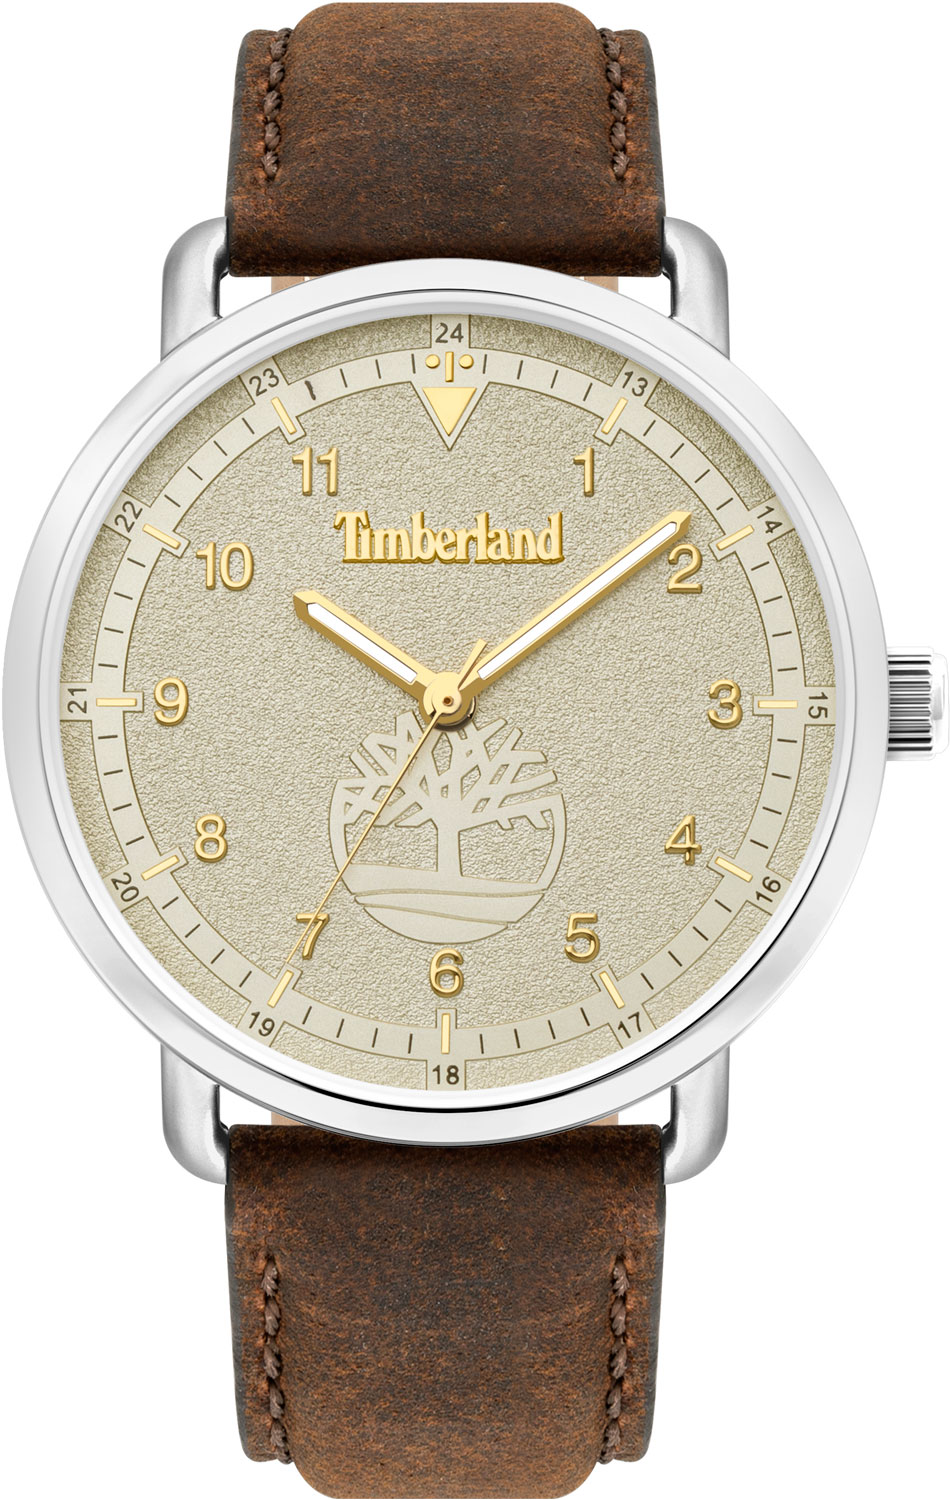 Фото - Мужские часы Timberland TBL.15939JS/14 мужские часы timberland tbl 15954jys 02mm